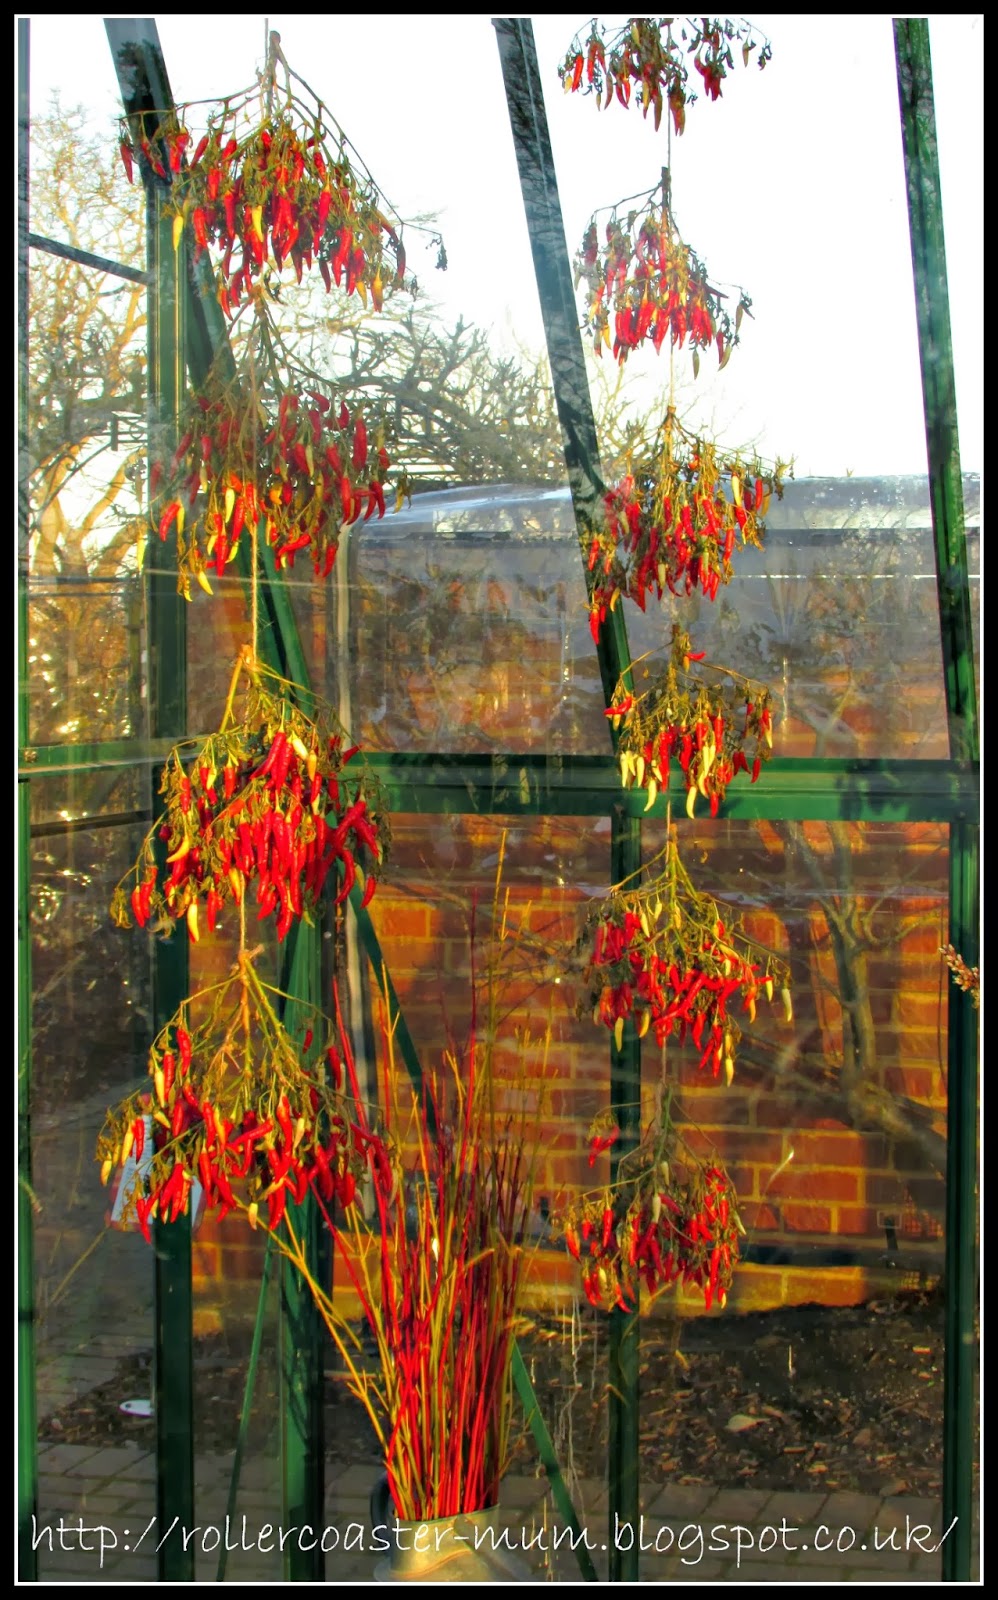 greenhouse Fruit Demo Garden RHS Wisley - drying chillies